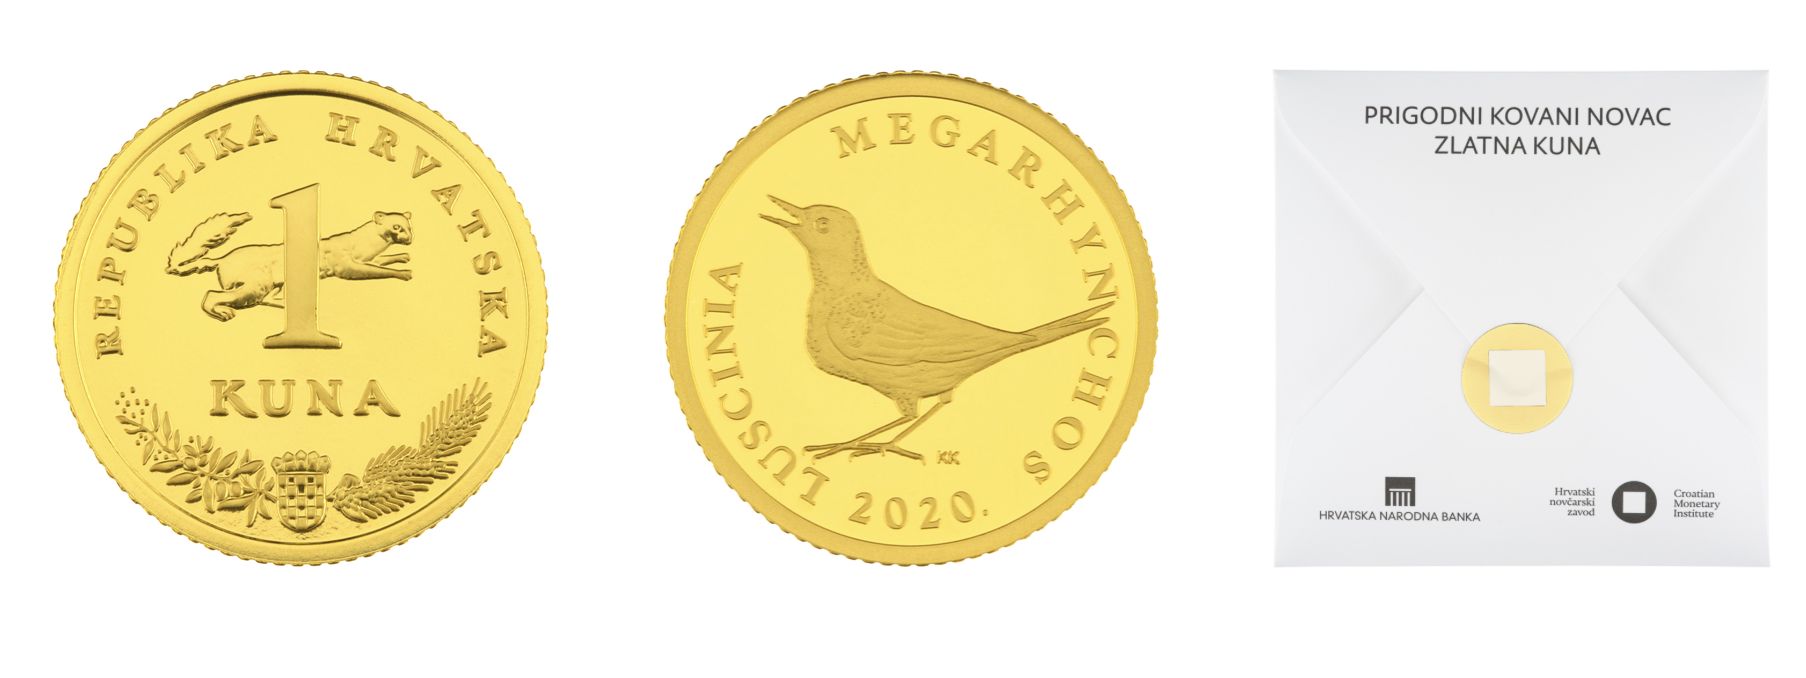 croatian gold coin one kuna